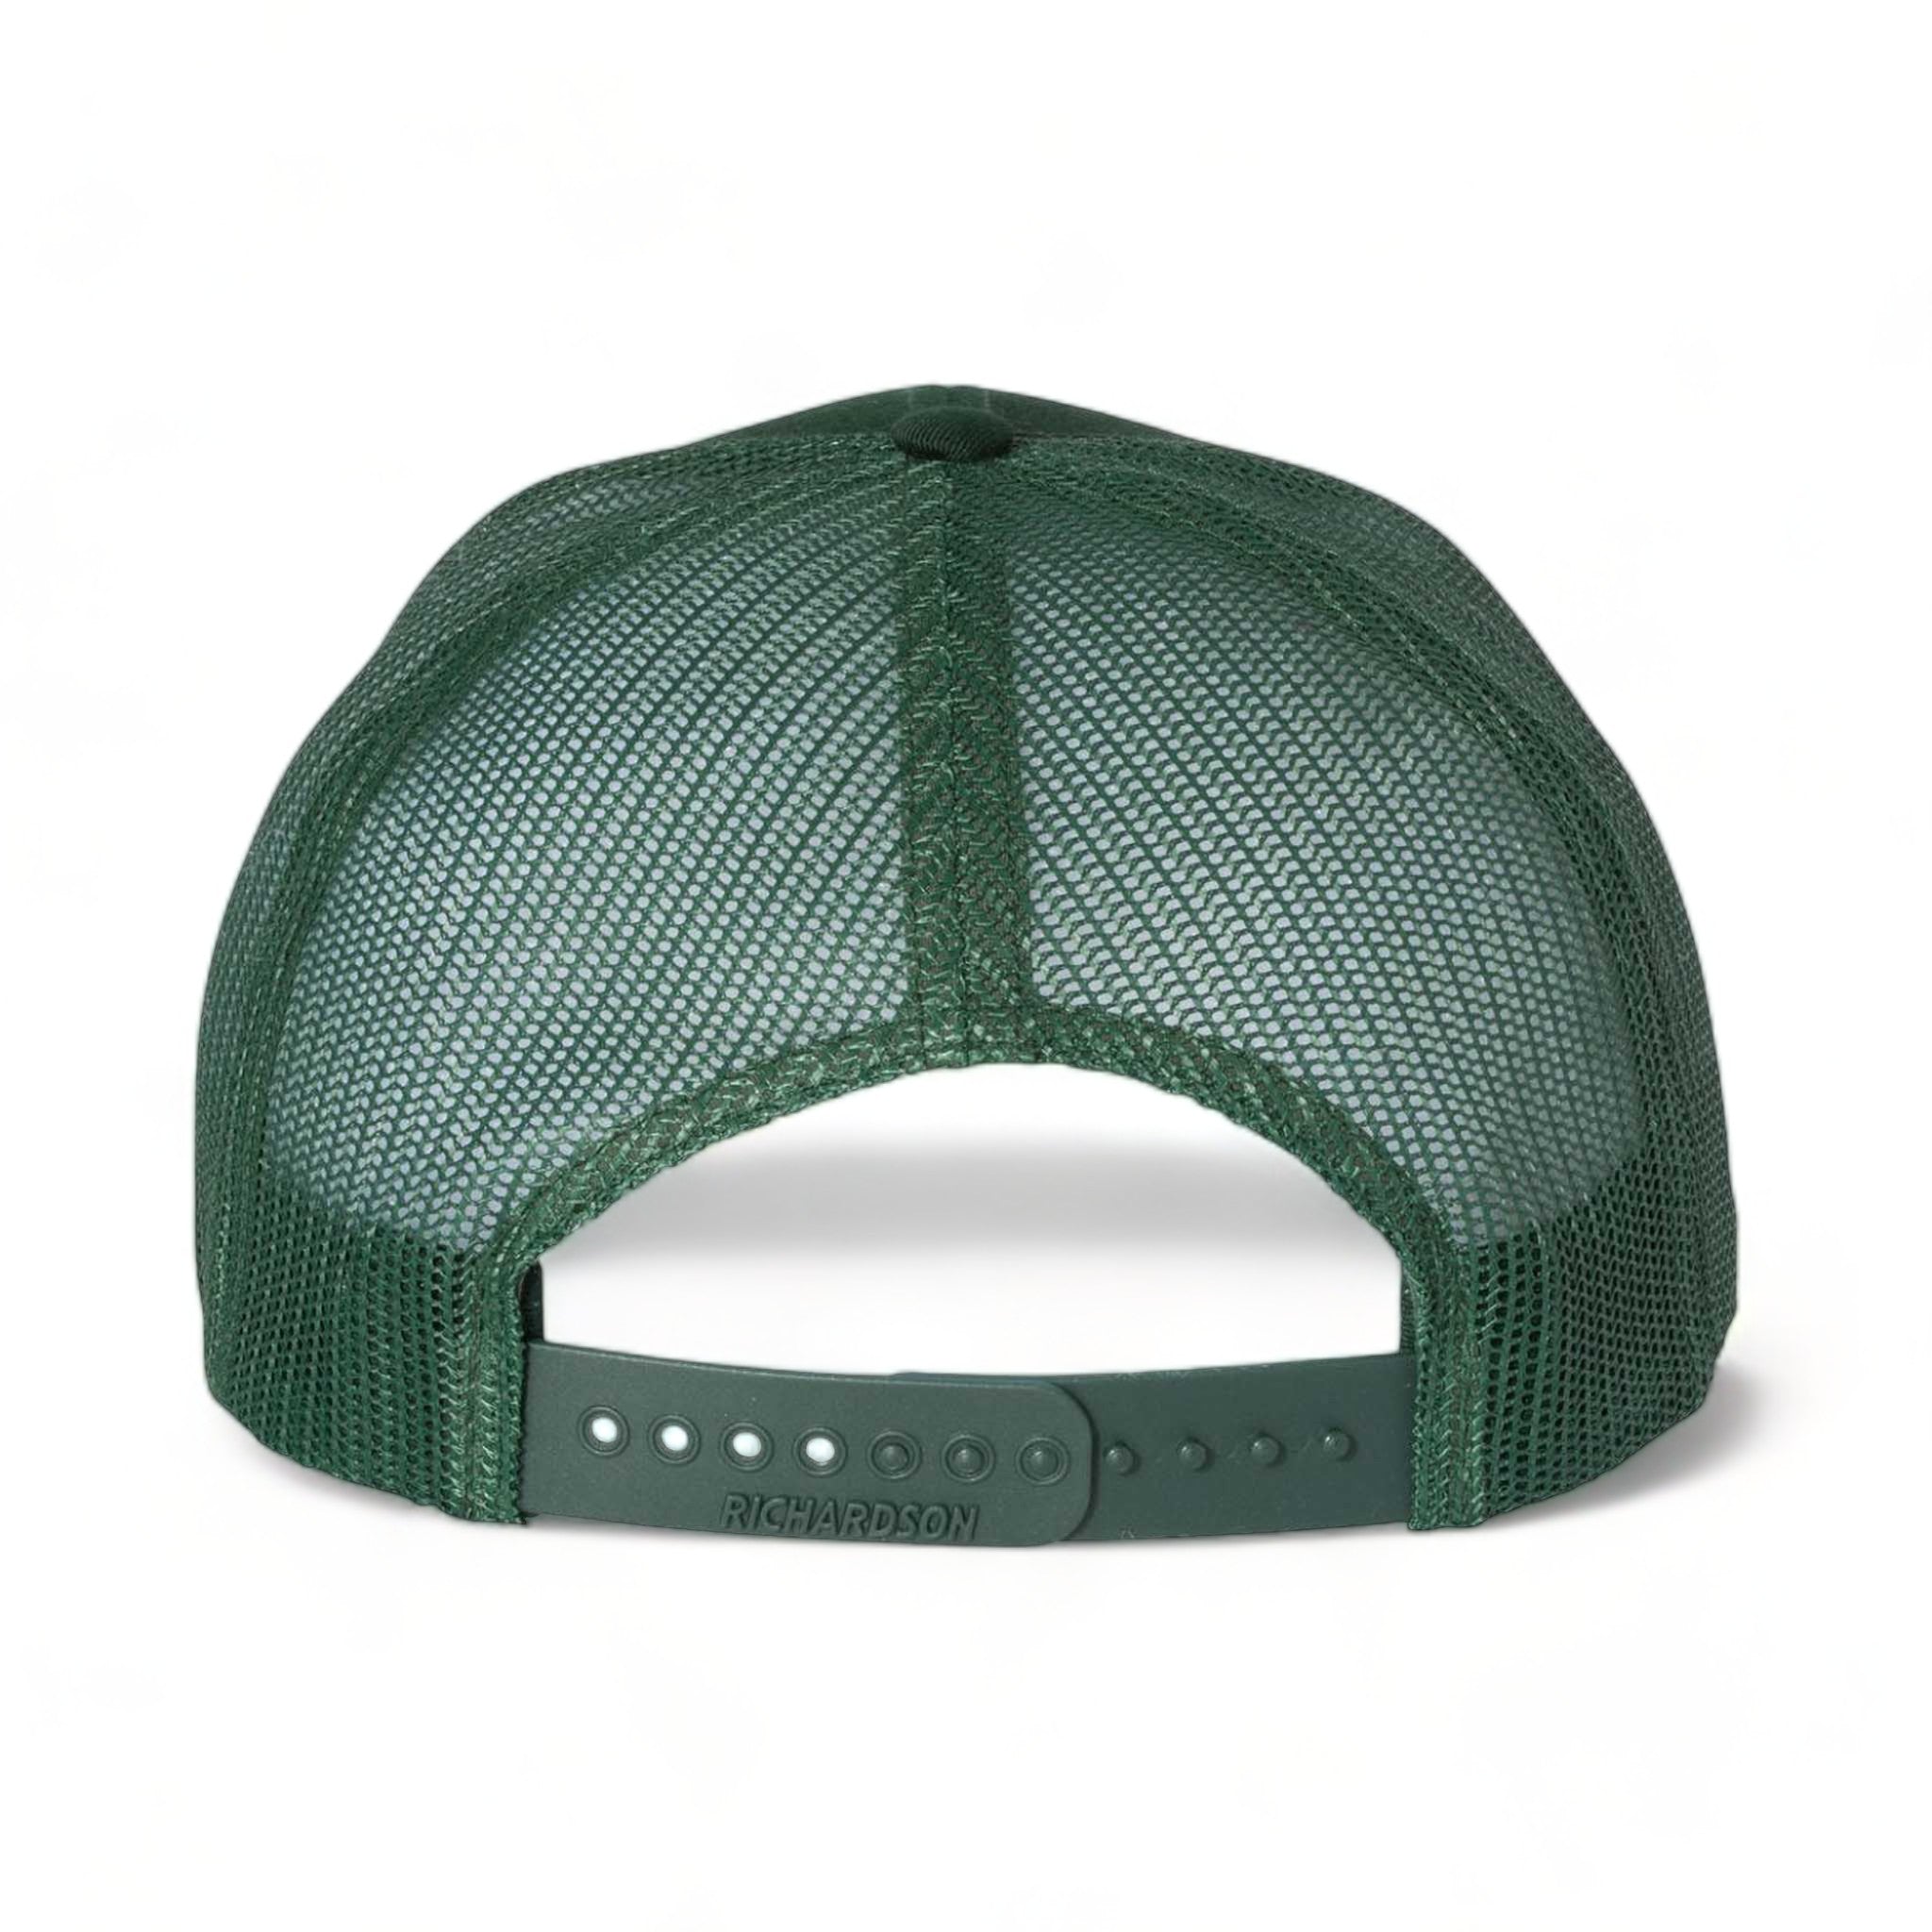 Back view of Richardson 112 custom hat in dark green